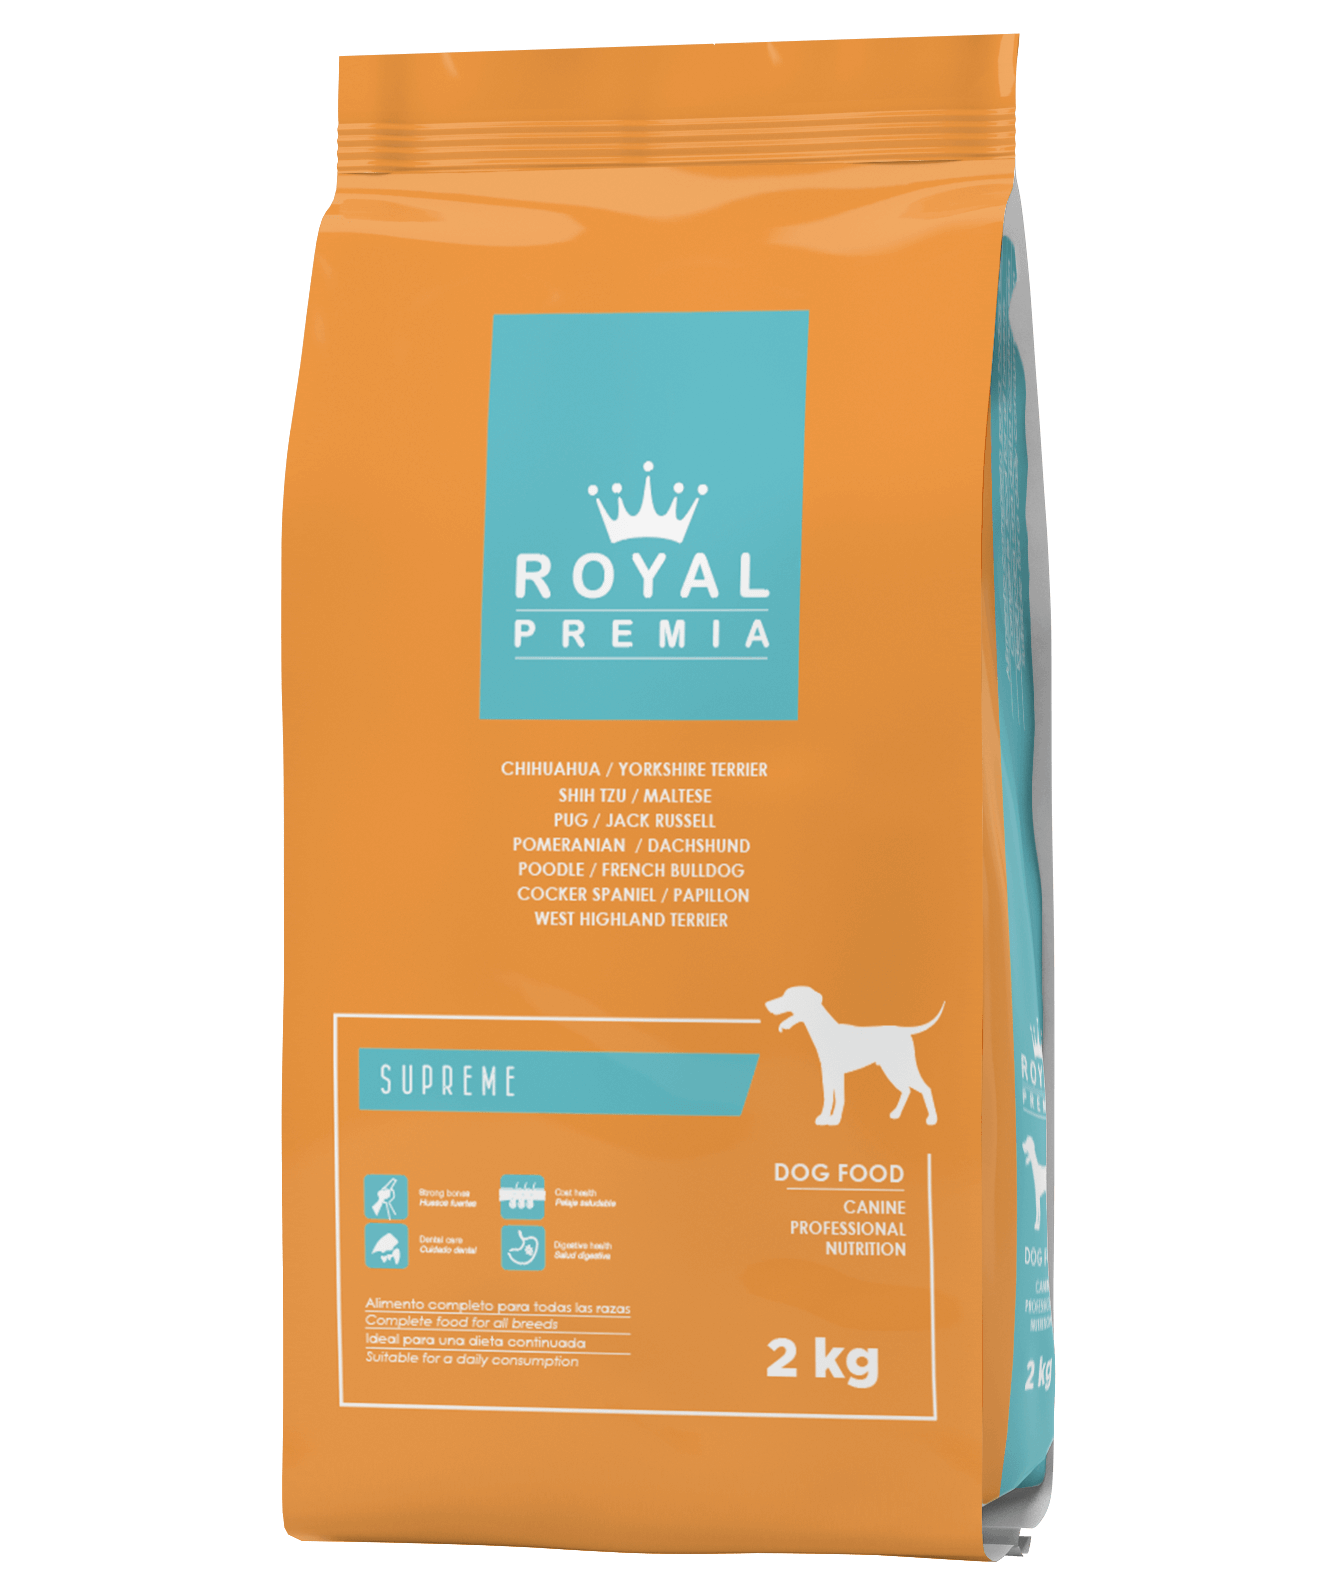 Royal Premia Dry Dog Food 2kg in Sharjah, Dubai